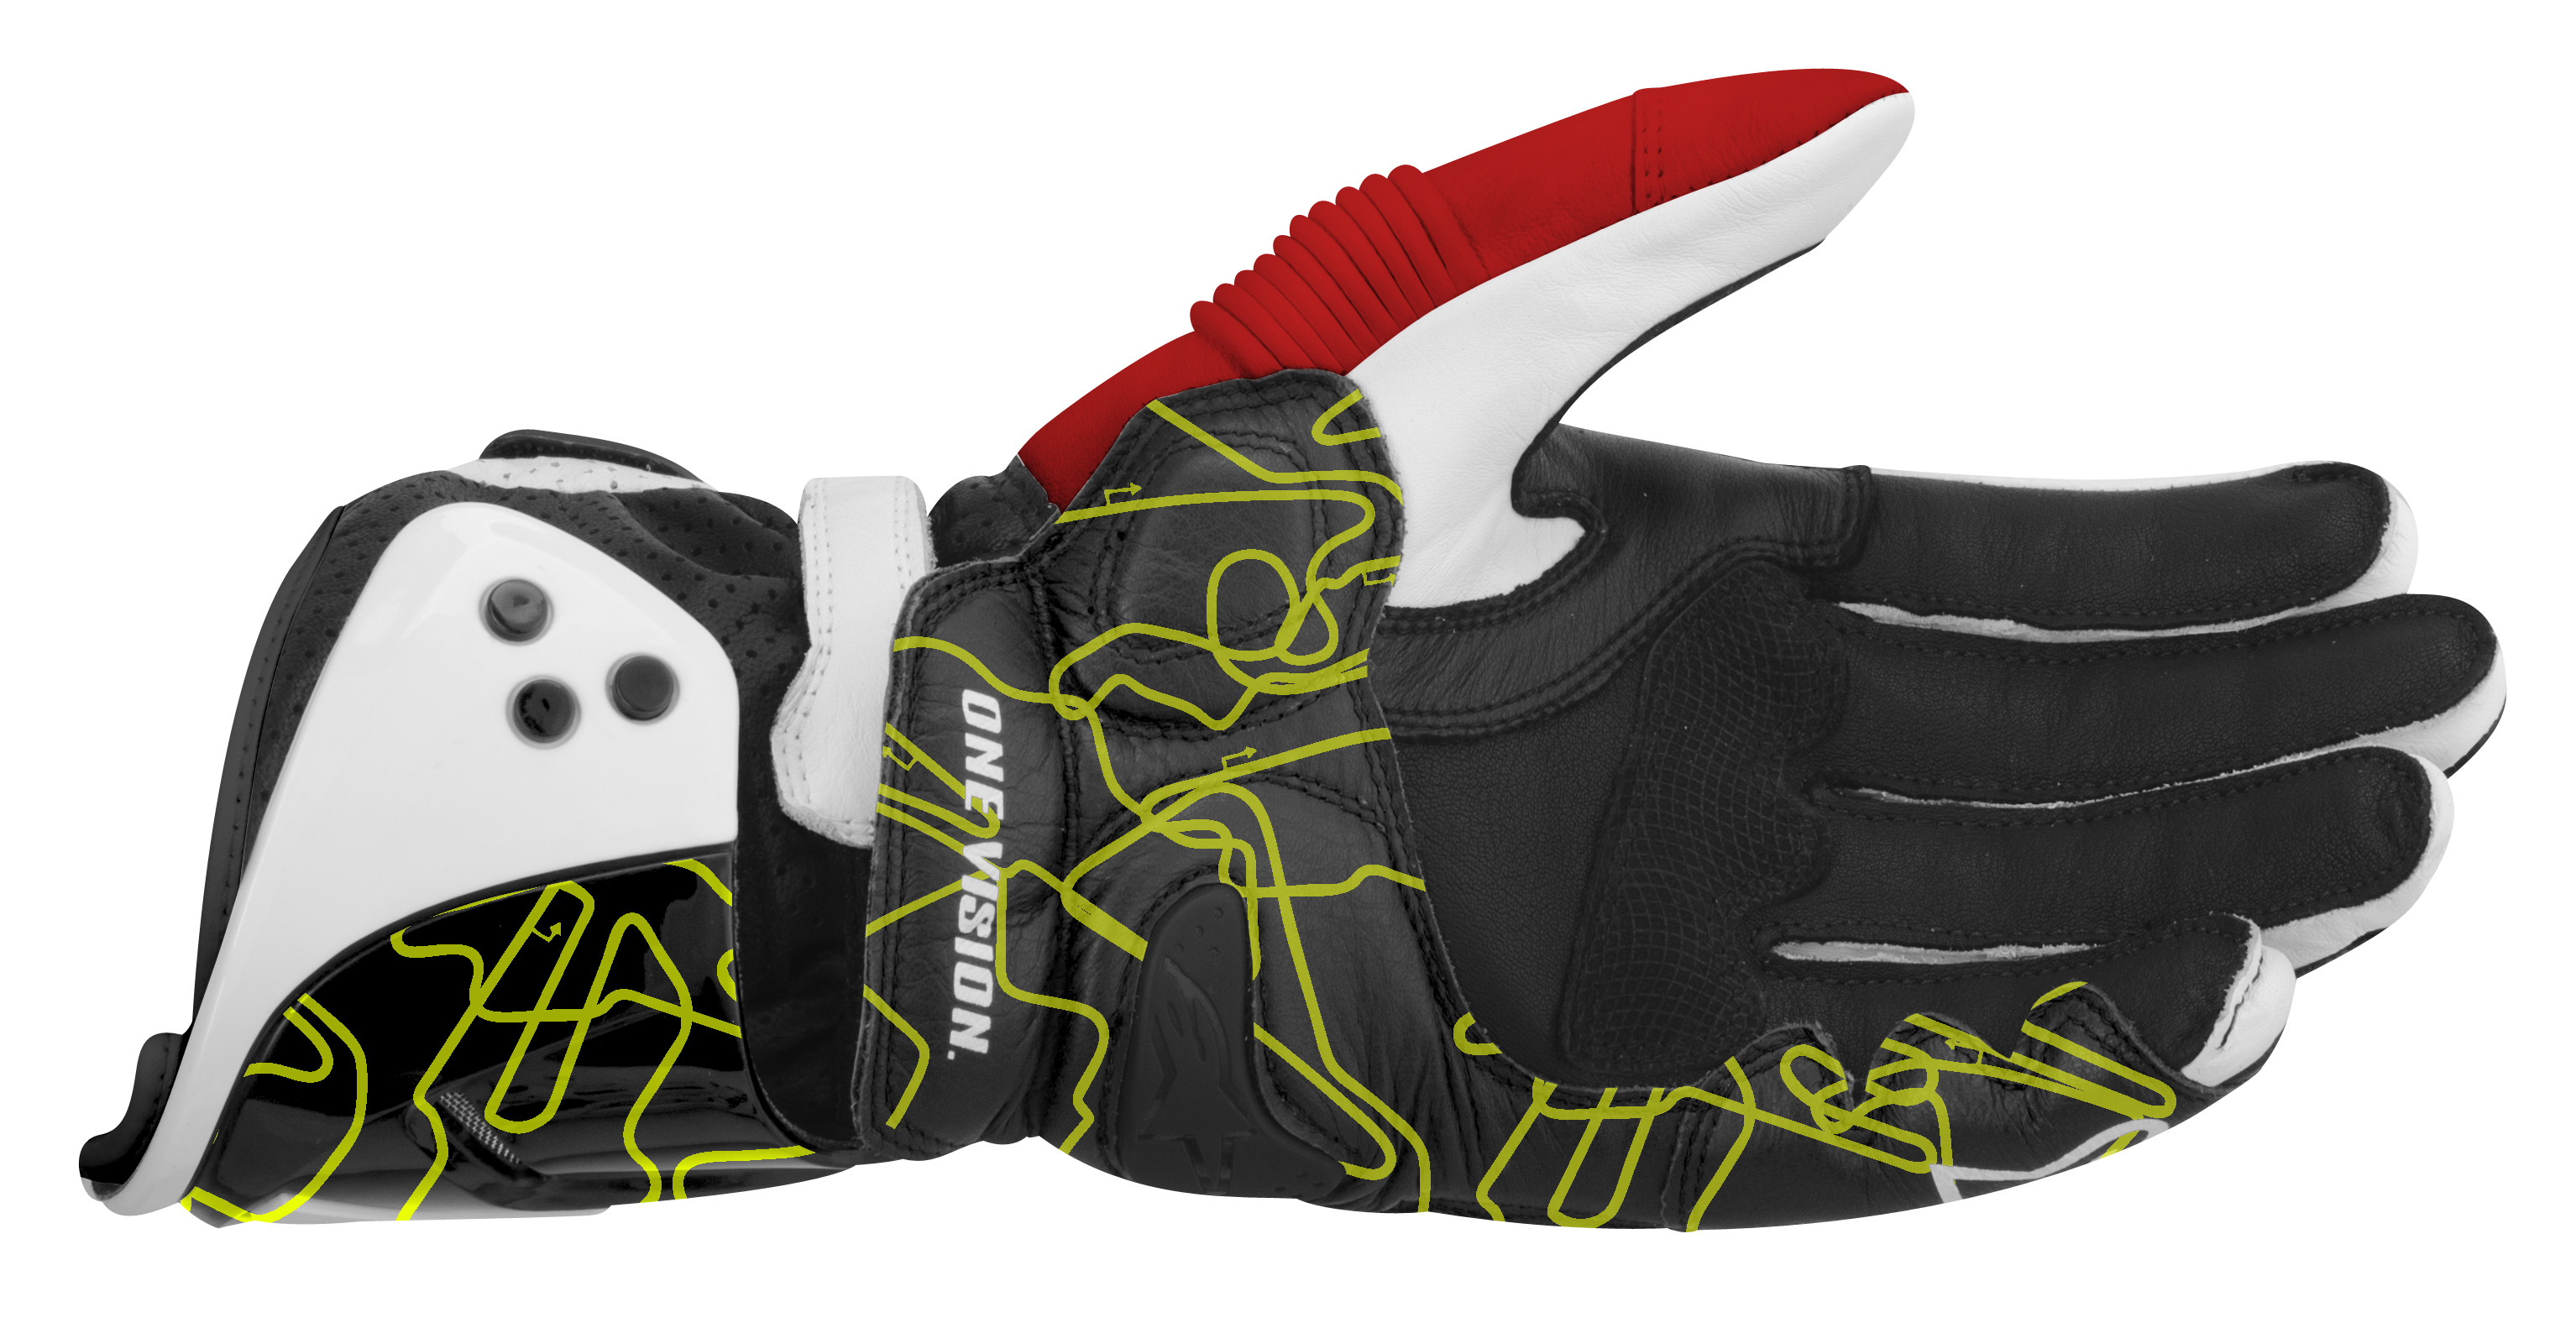 New: 2013 Alpinestars GP Pro gloves